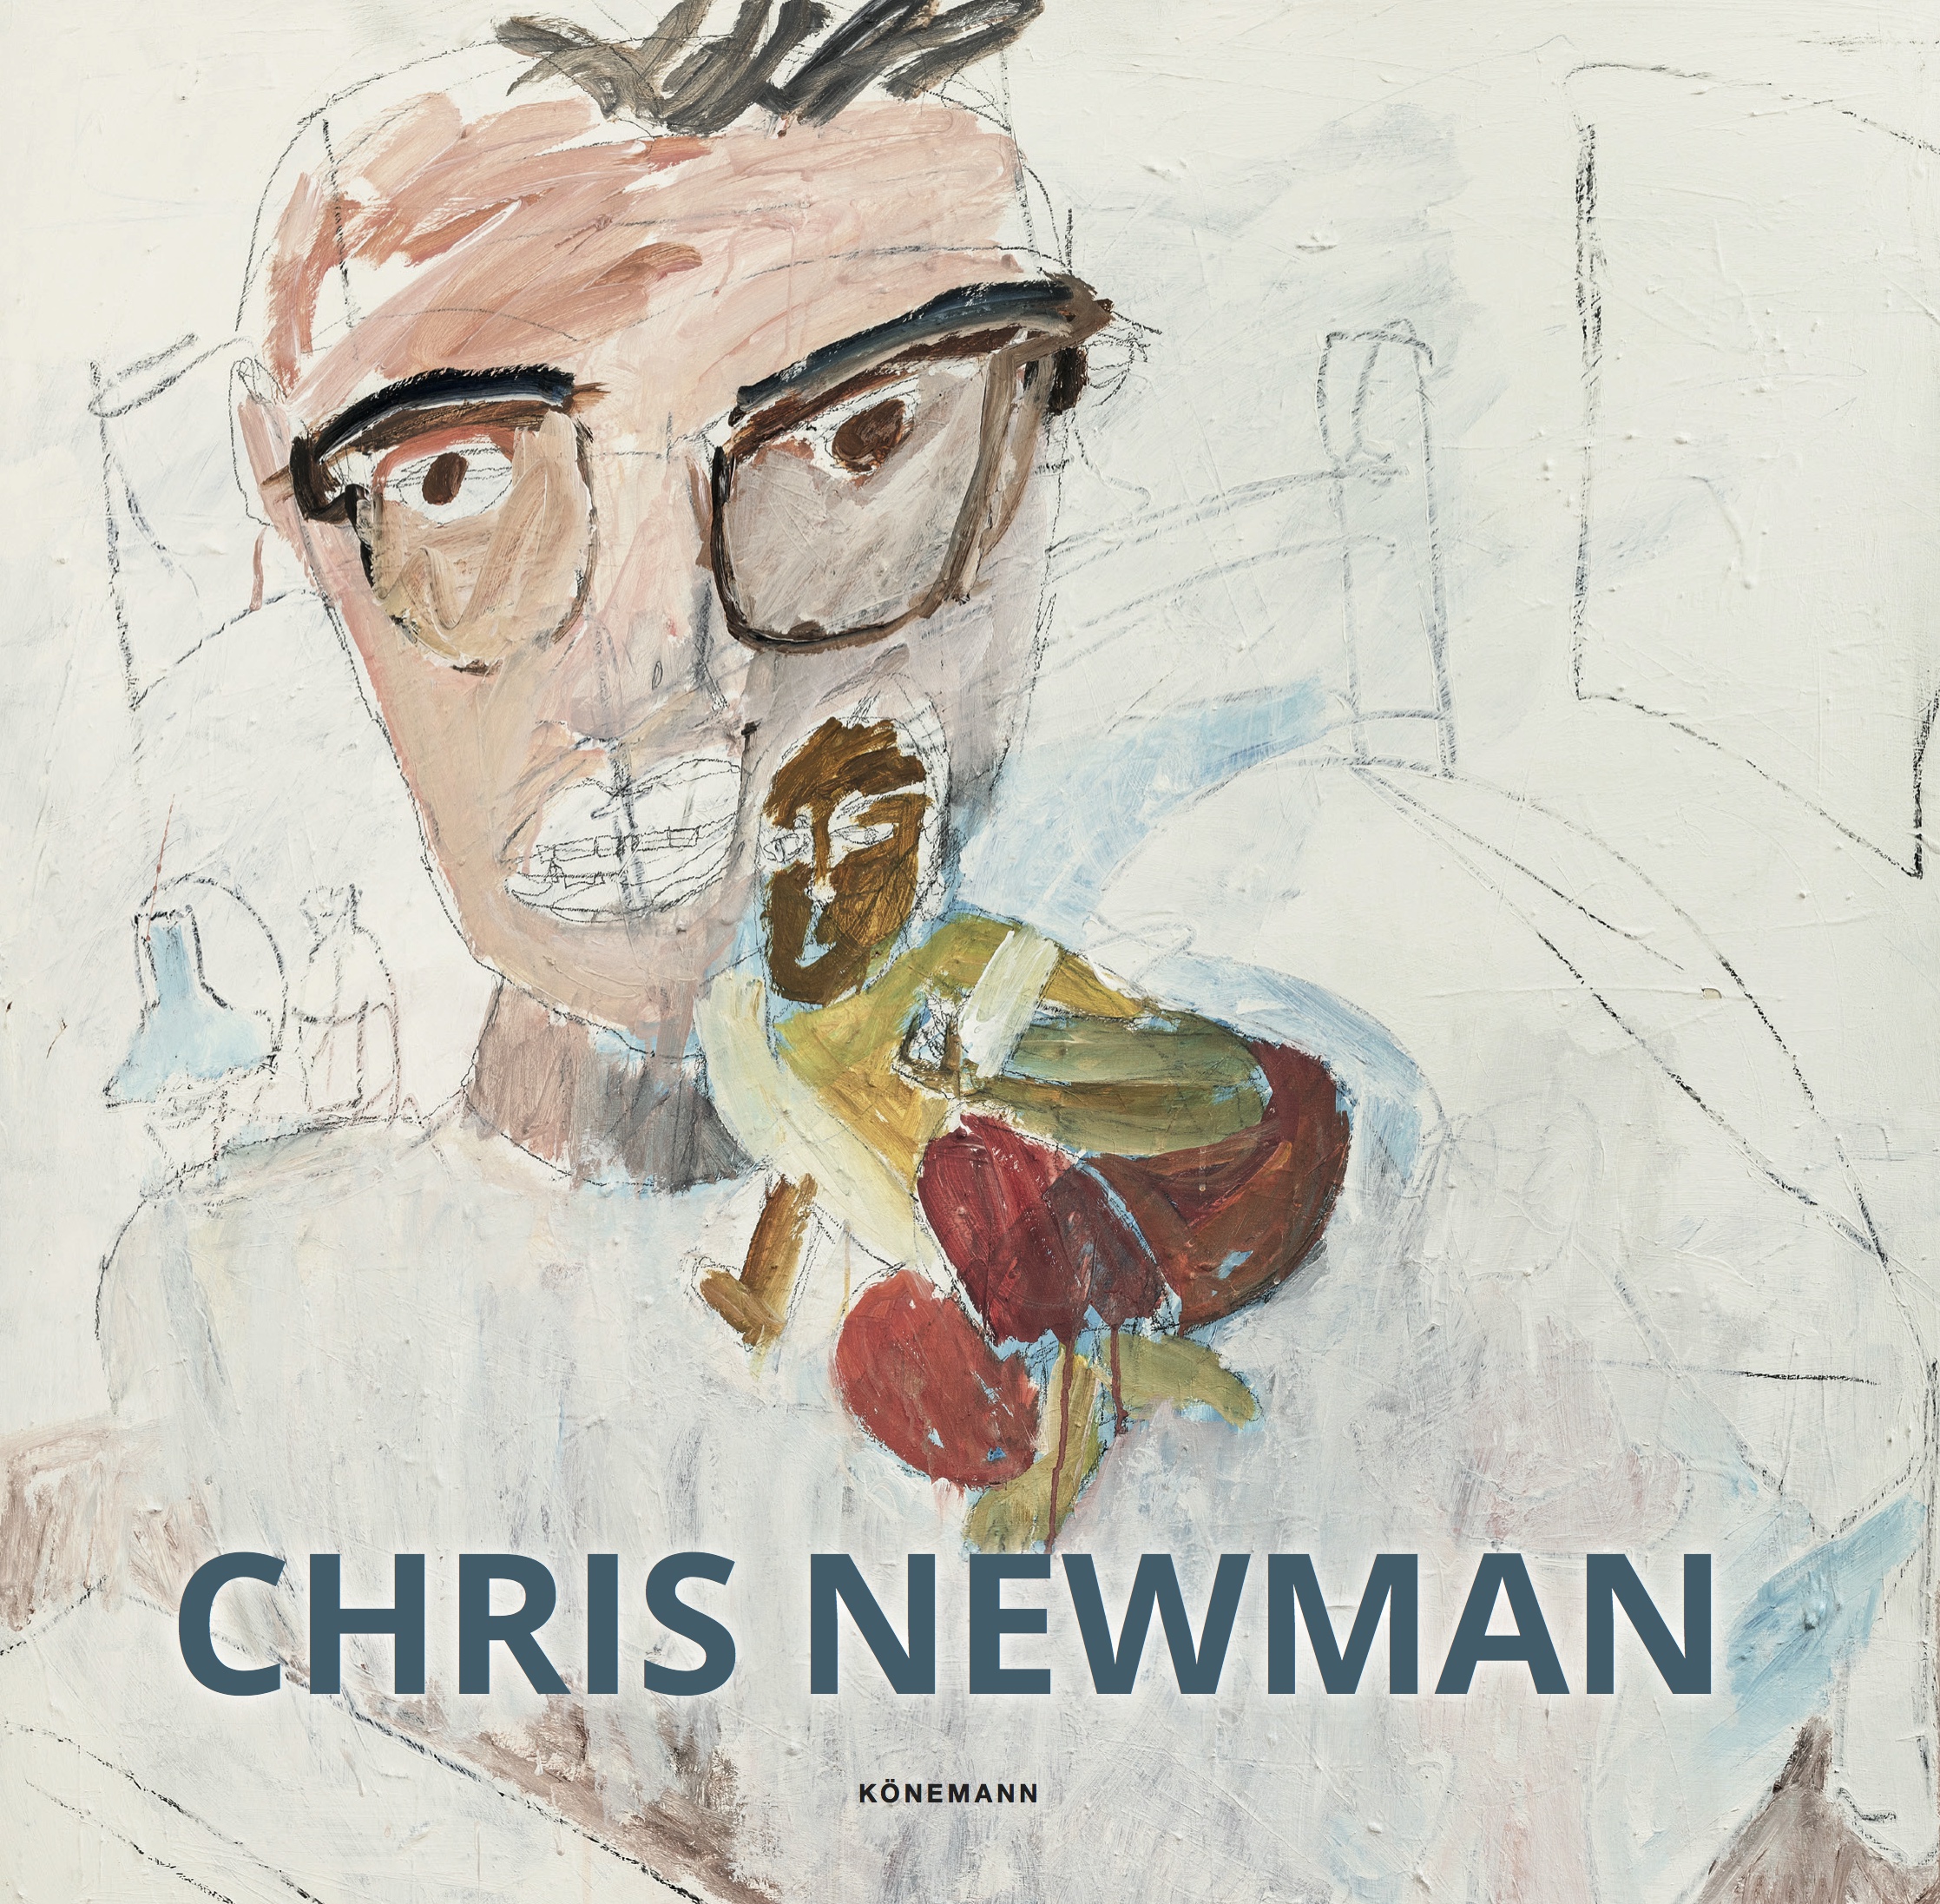 Chris Newman